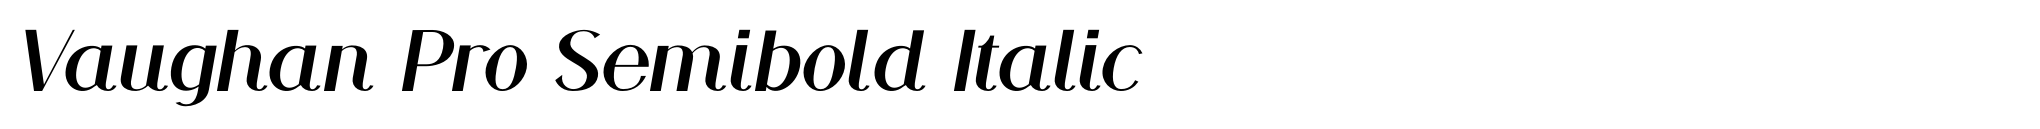 Vaughan Pro Semibold Italic image